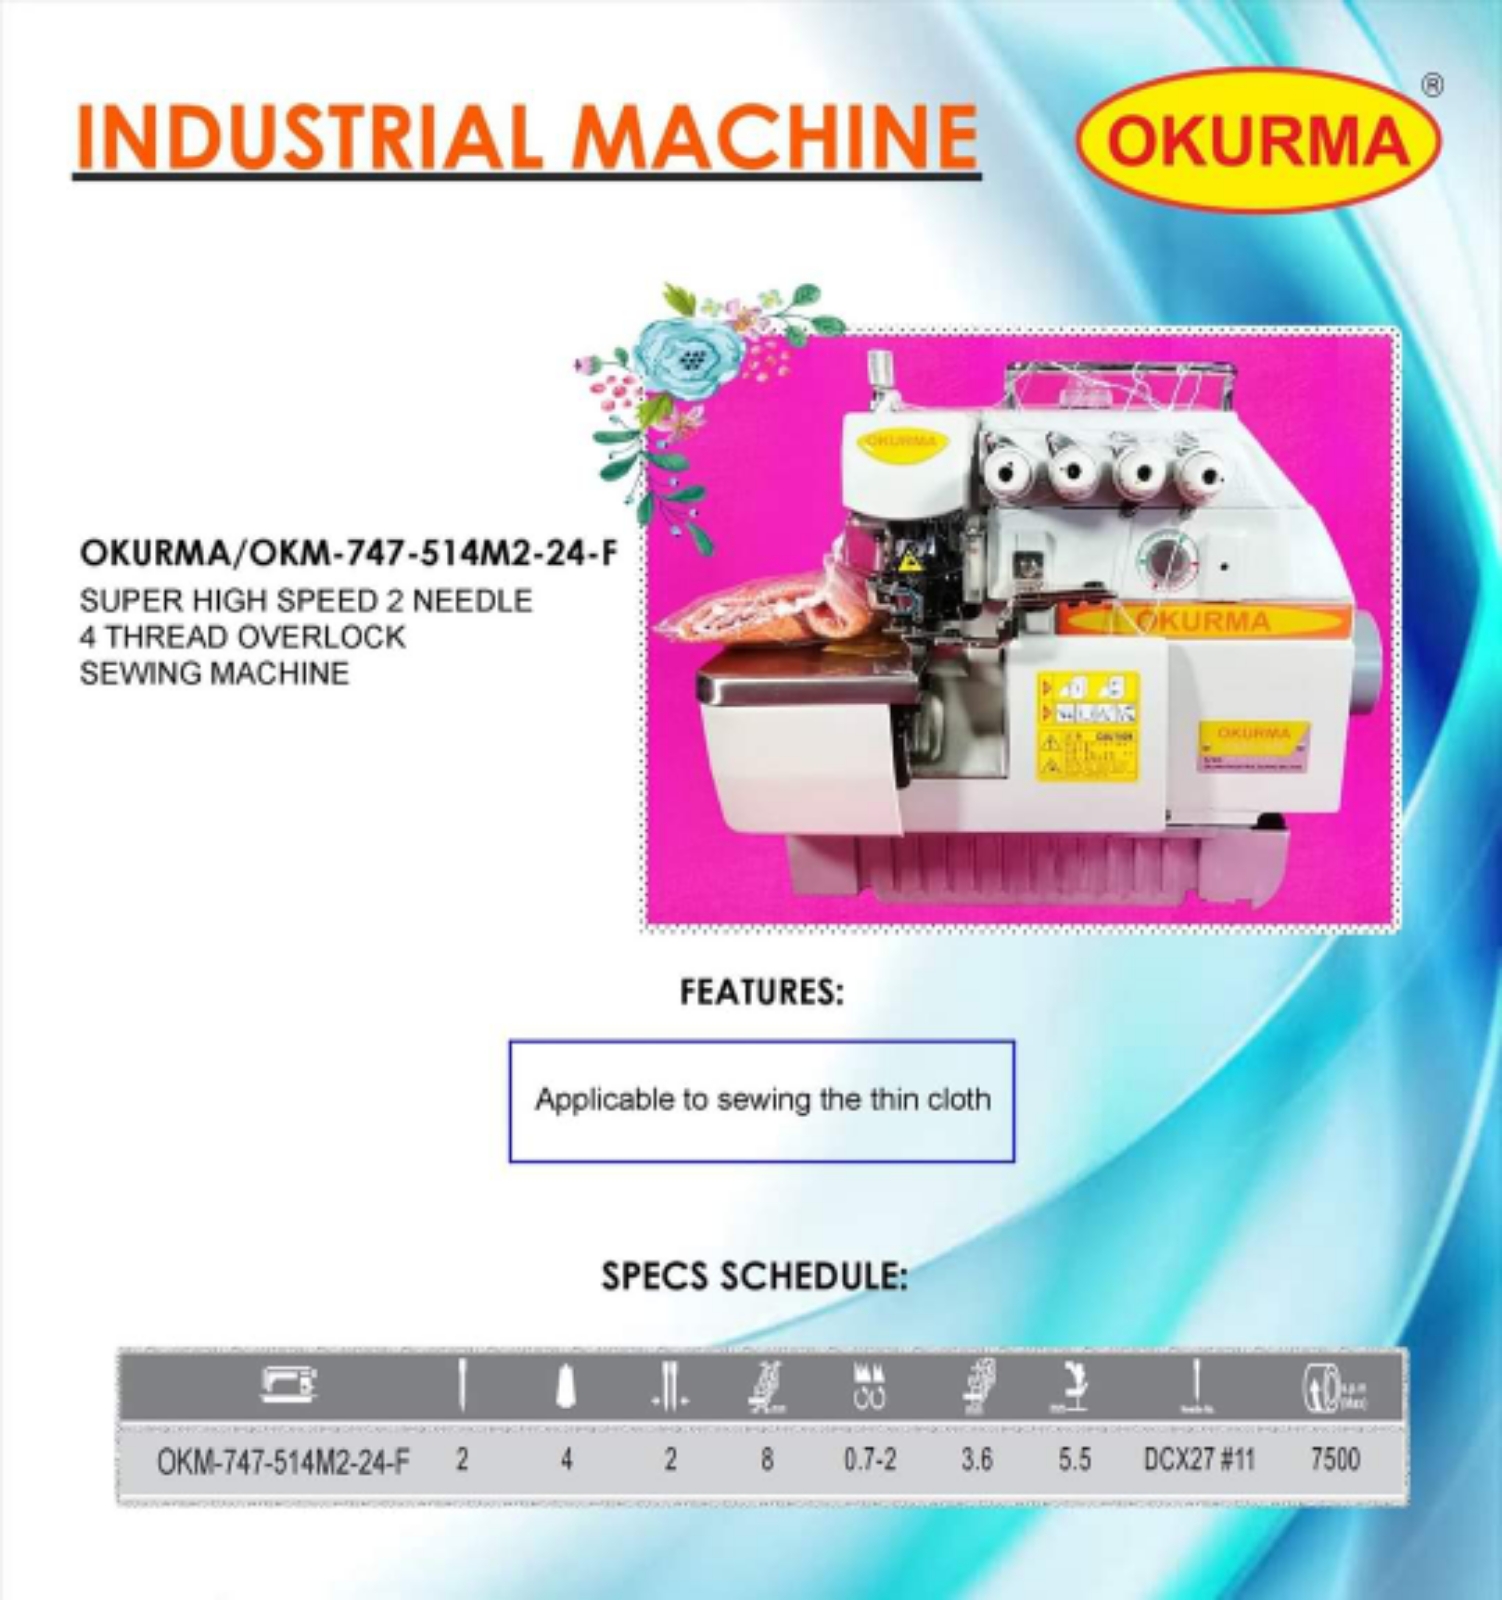 OKURMA INDUSTRIAL OVERLOCK SEWING MACHINE